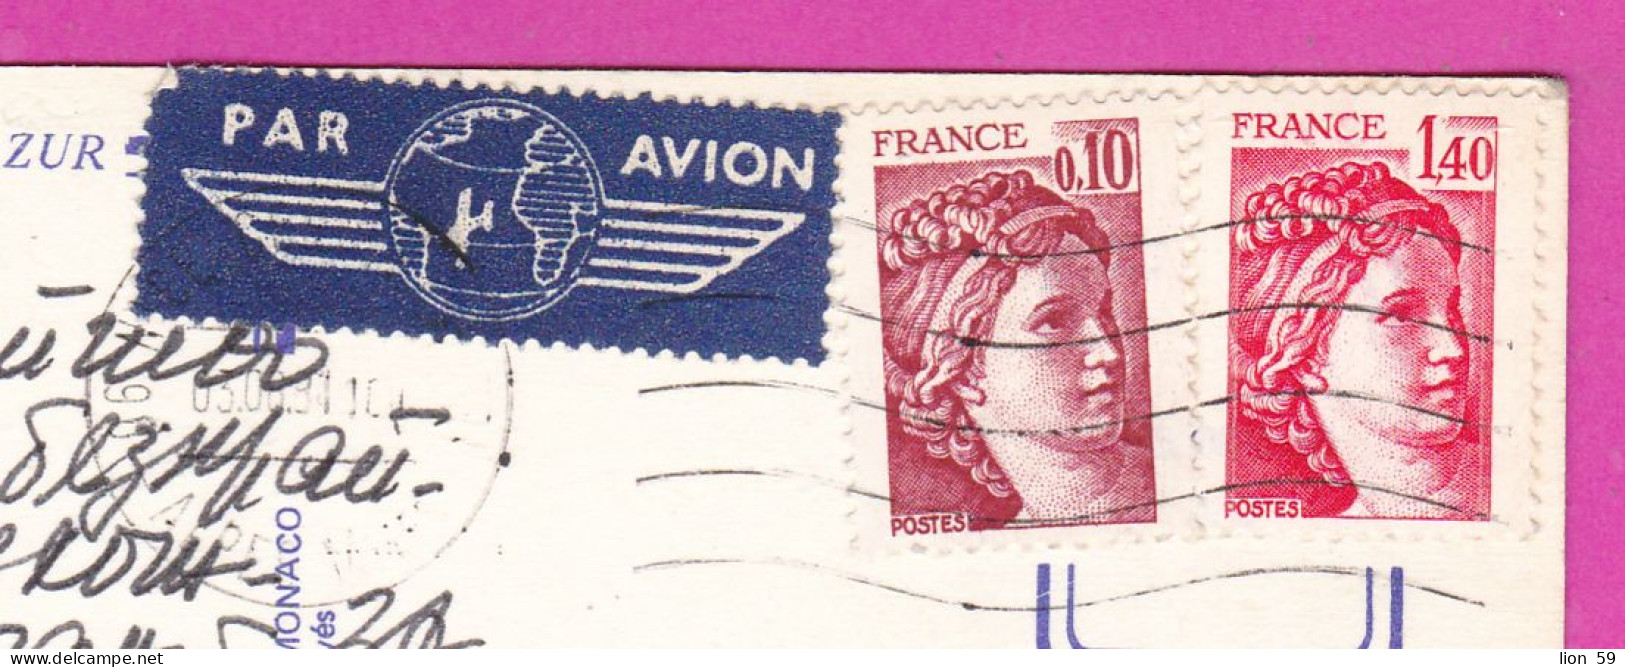 294171 / France - NICE 5 View PC 1981 Par Avion USED 0.10+1.40 Fr. Sabine De Gandon , Frankreich Francia - 1977-1981 Sabine De Gandon